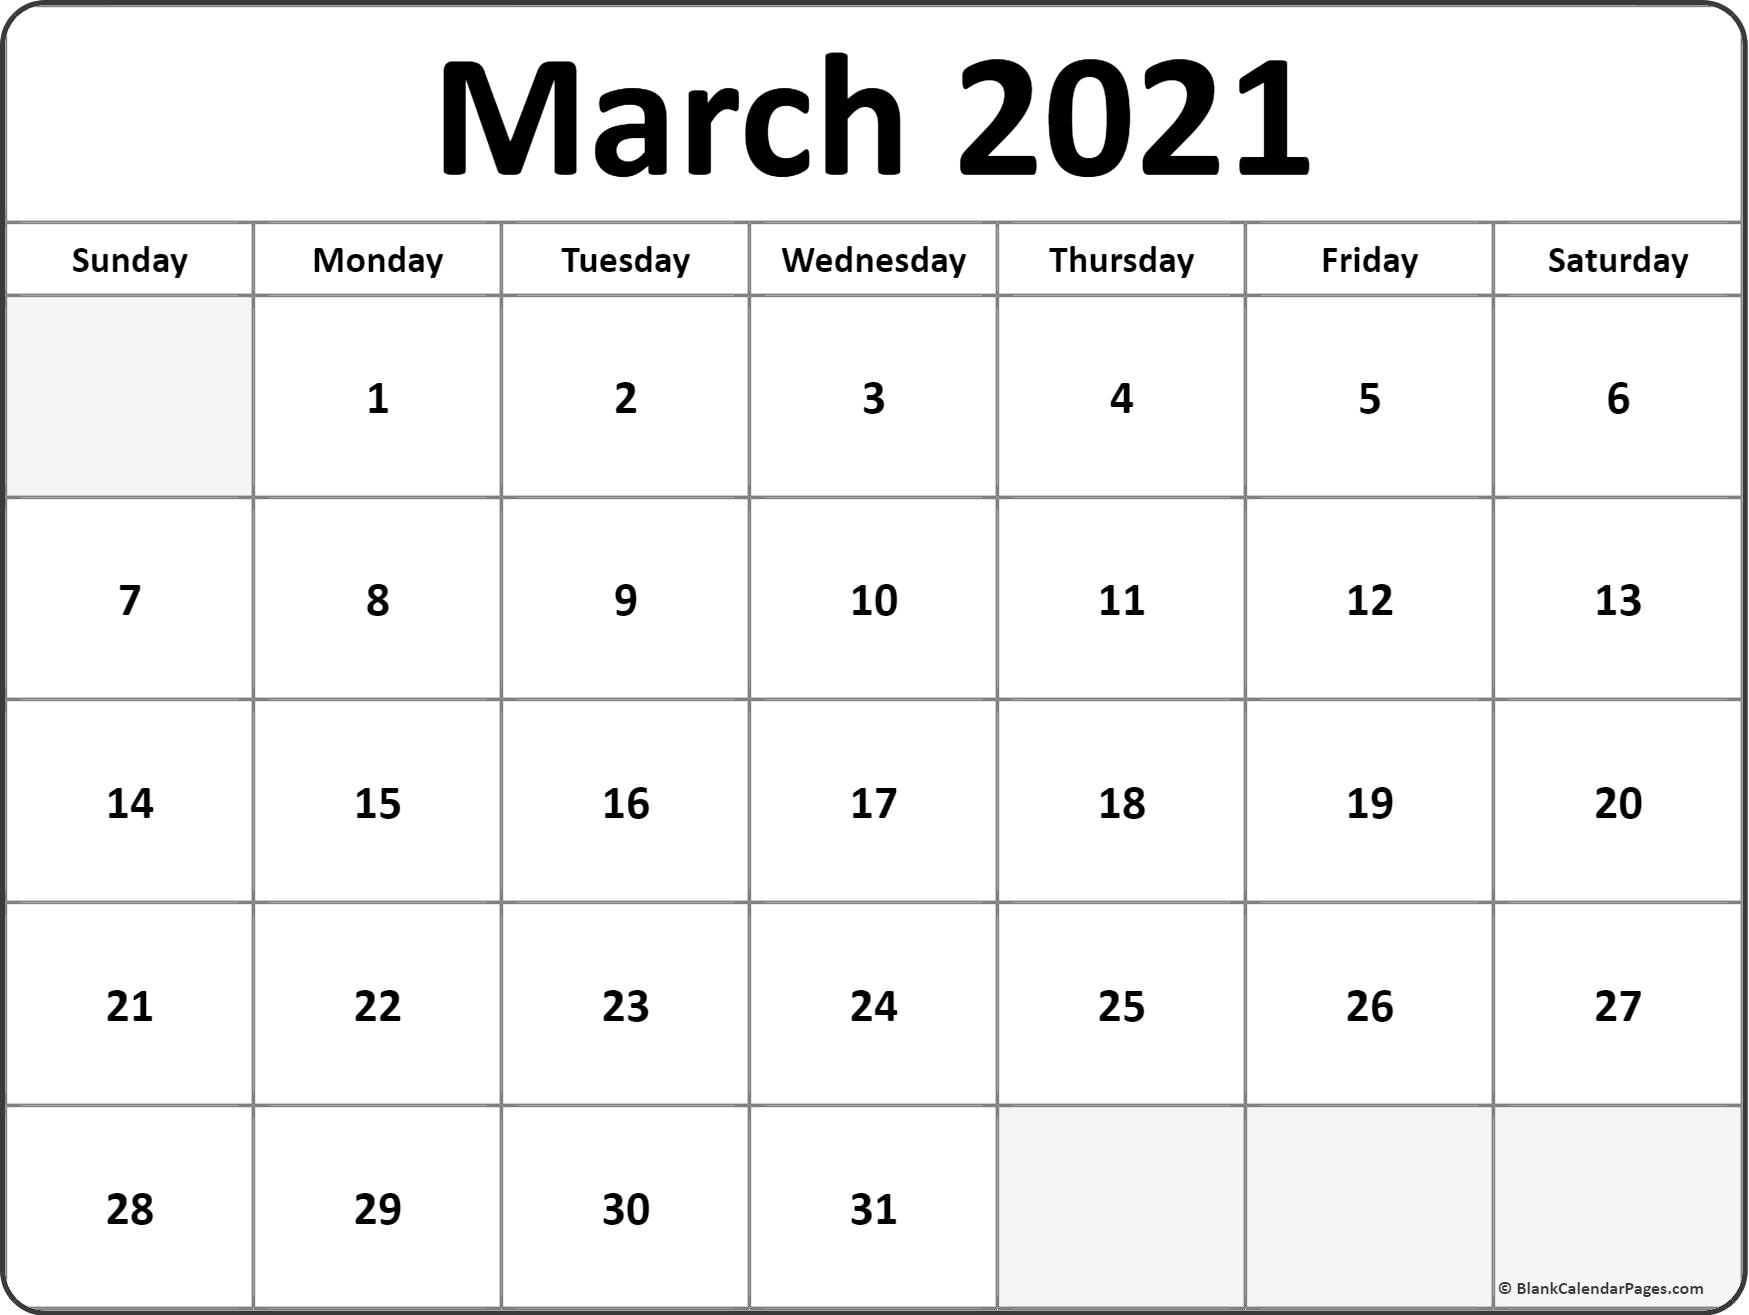 March 2021 Blank Calendar Collection